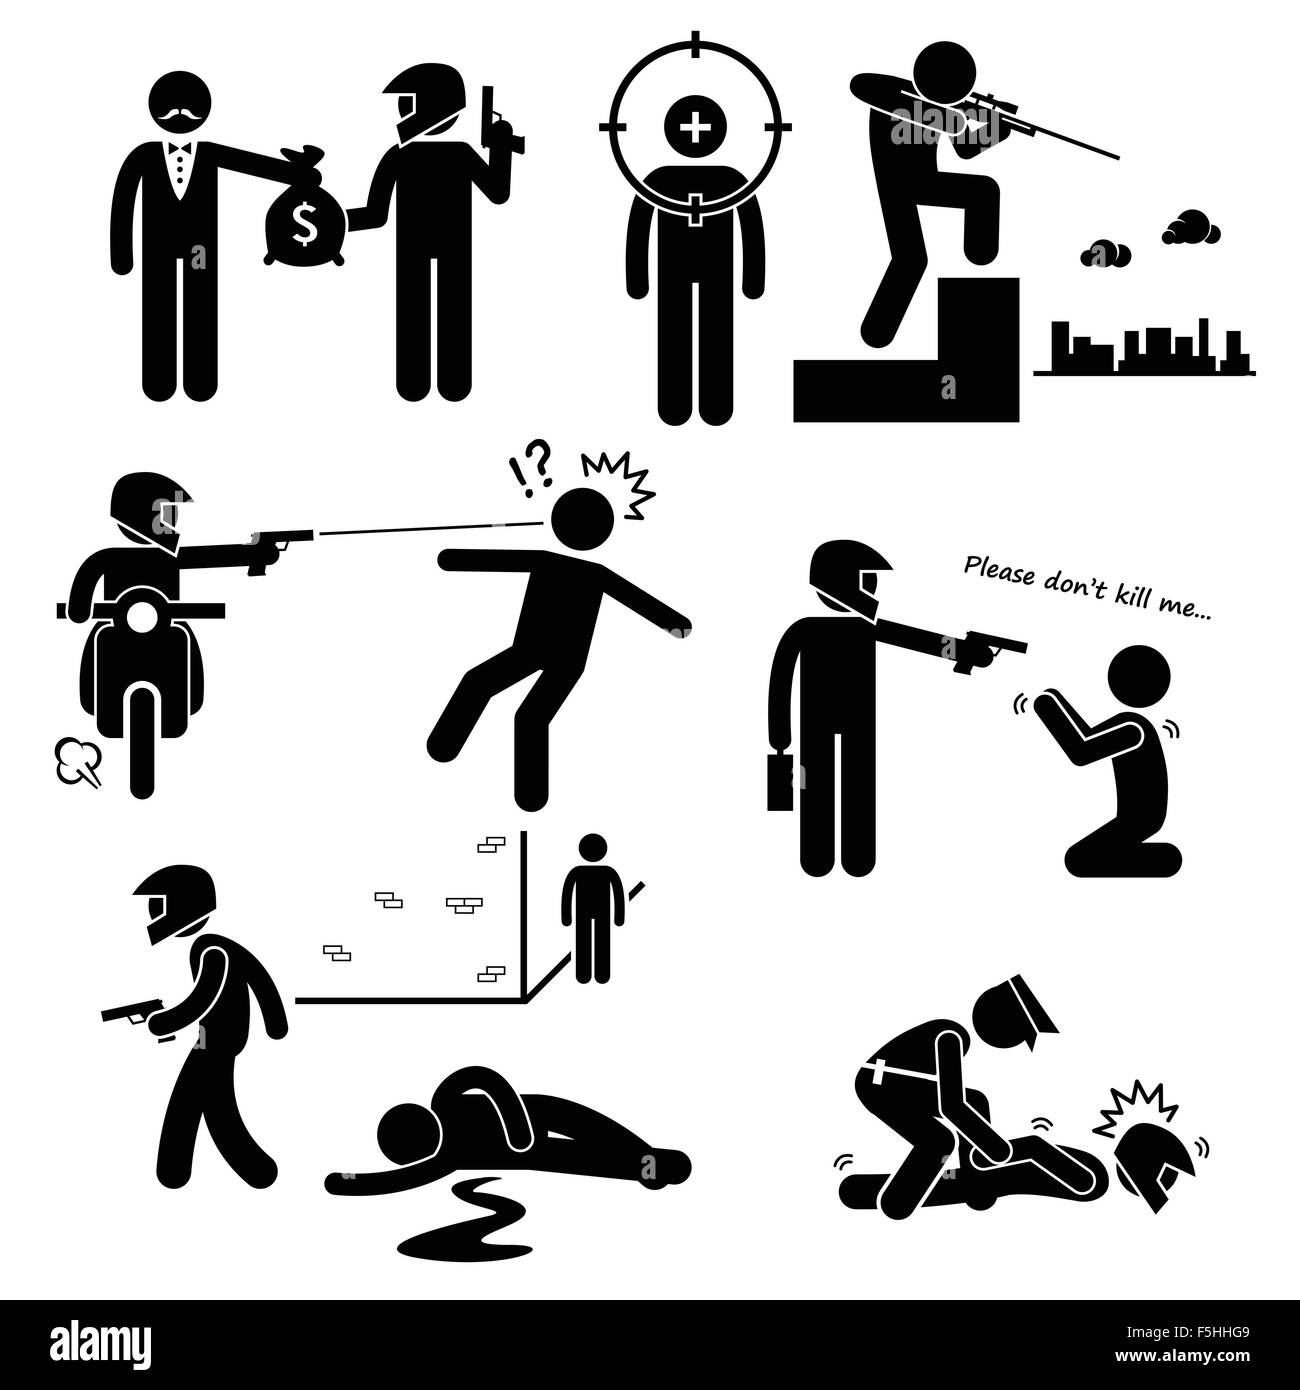 Assassination Hitman Killer Murder Gunman Stick Figure Pictogram Icons Stock Vector